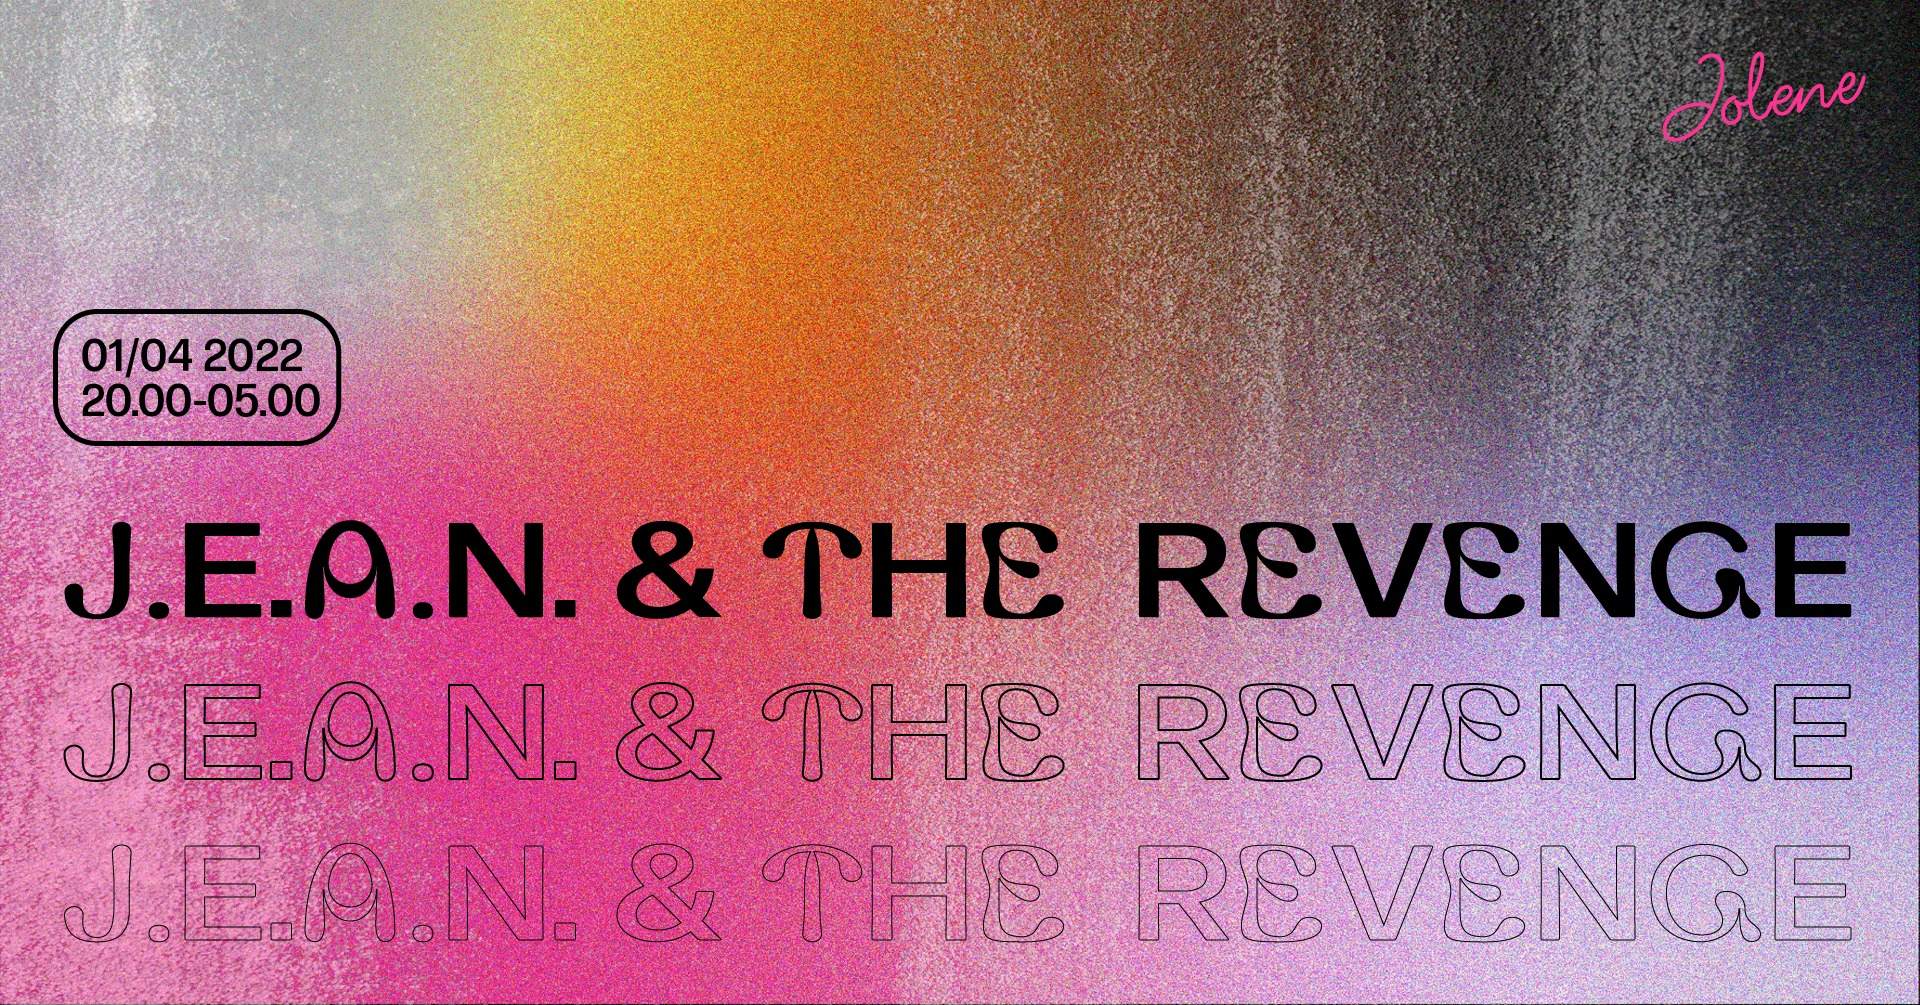 Jolene presents: J.E.A.N. and The Revenge - フライヤー表